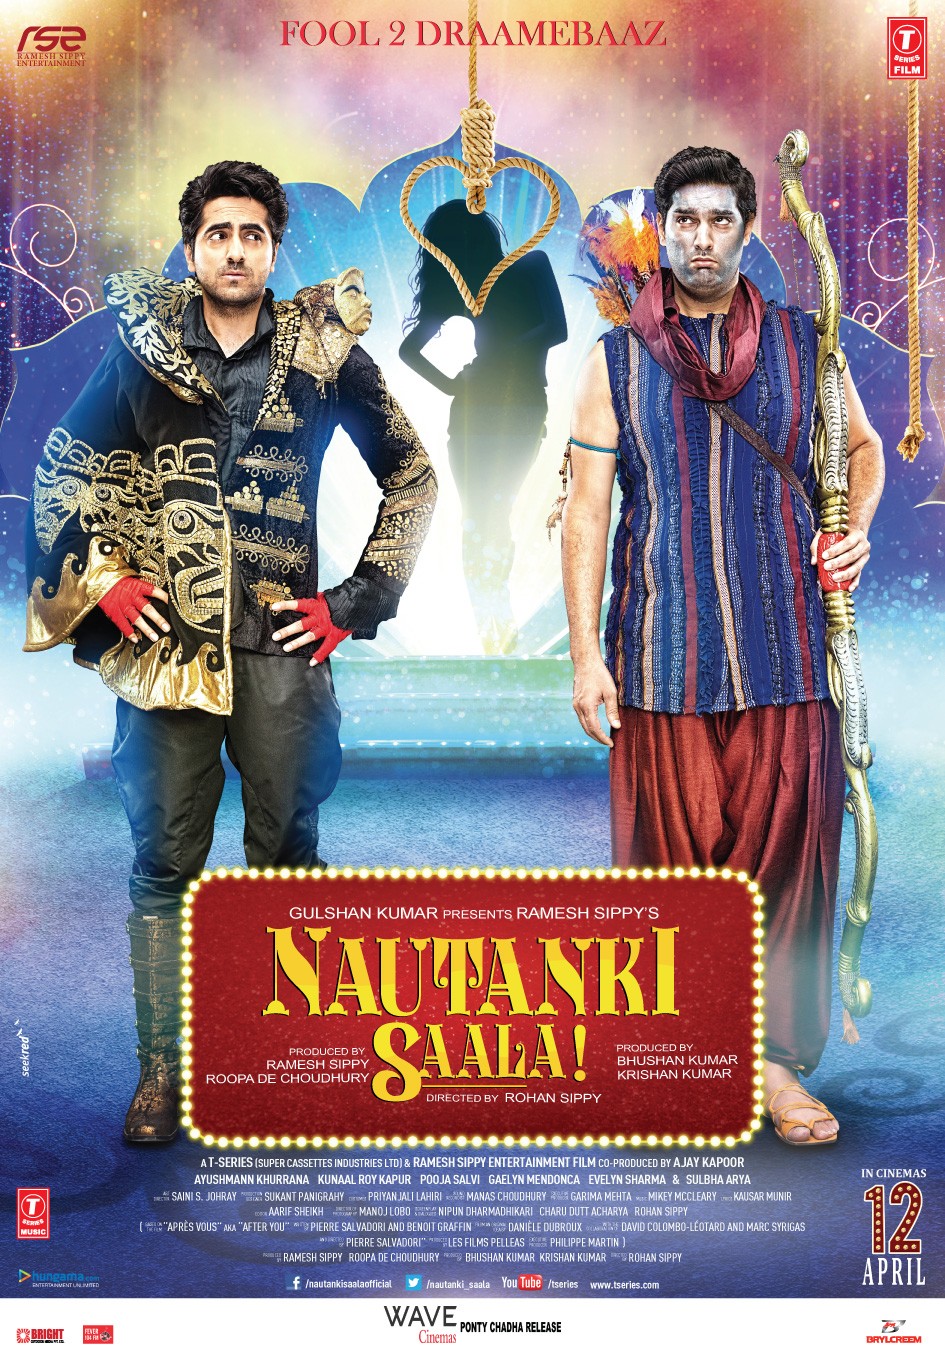 Extra Large Movie Poster Image for Nautanki Saala! (#2 of 5)